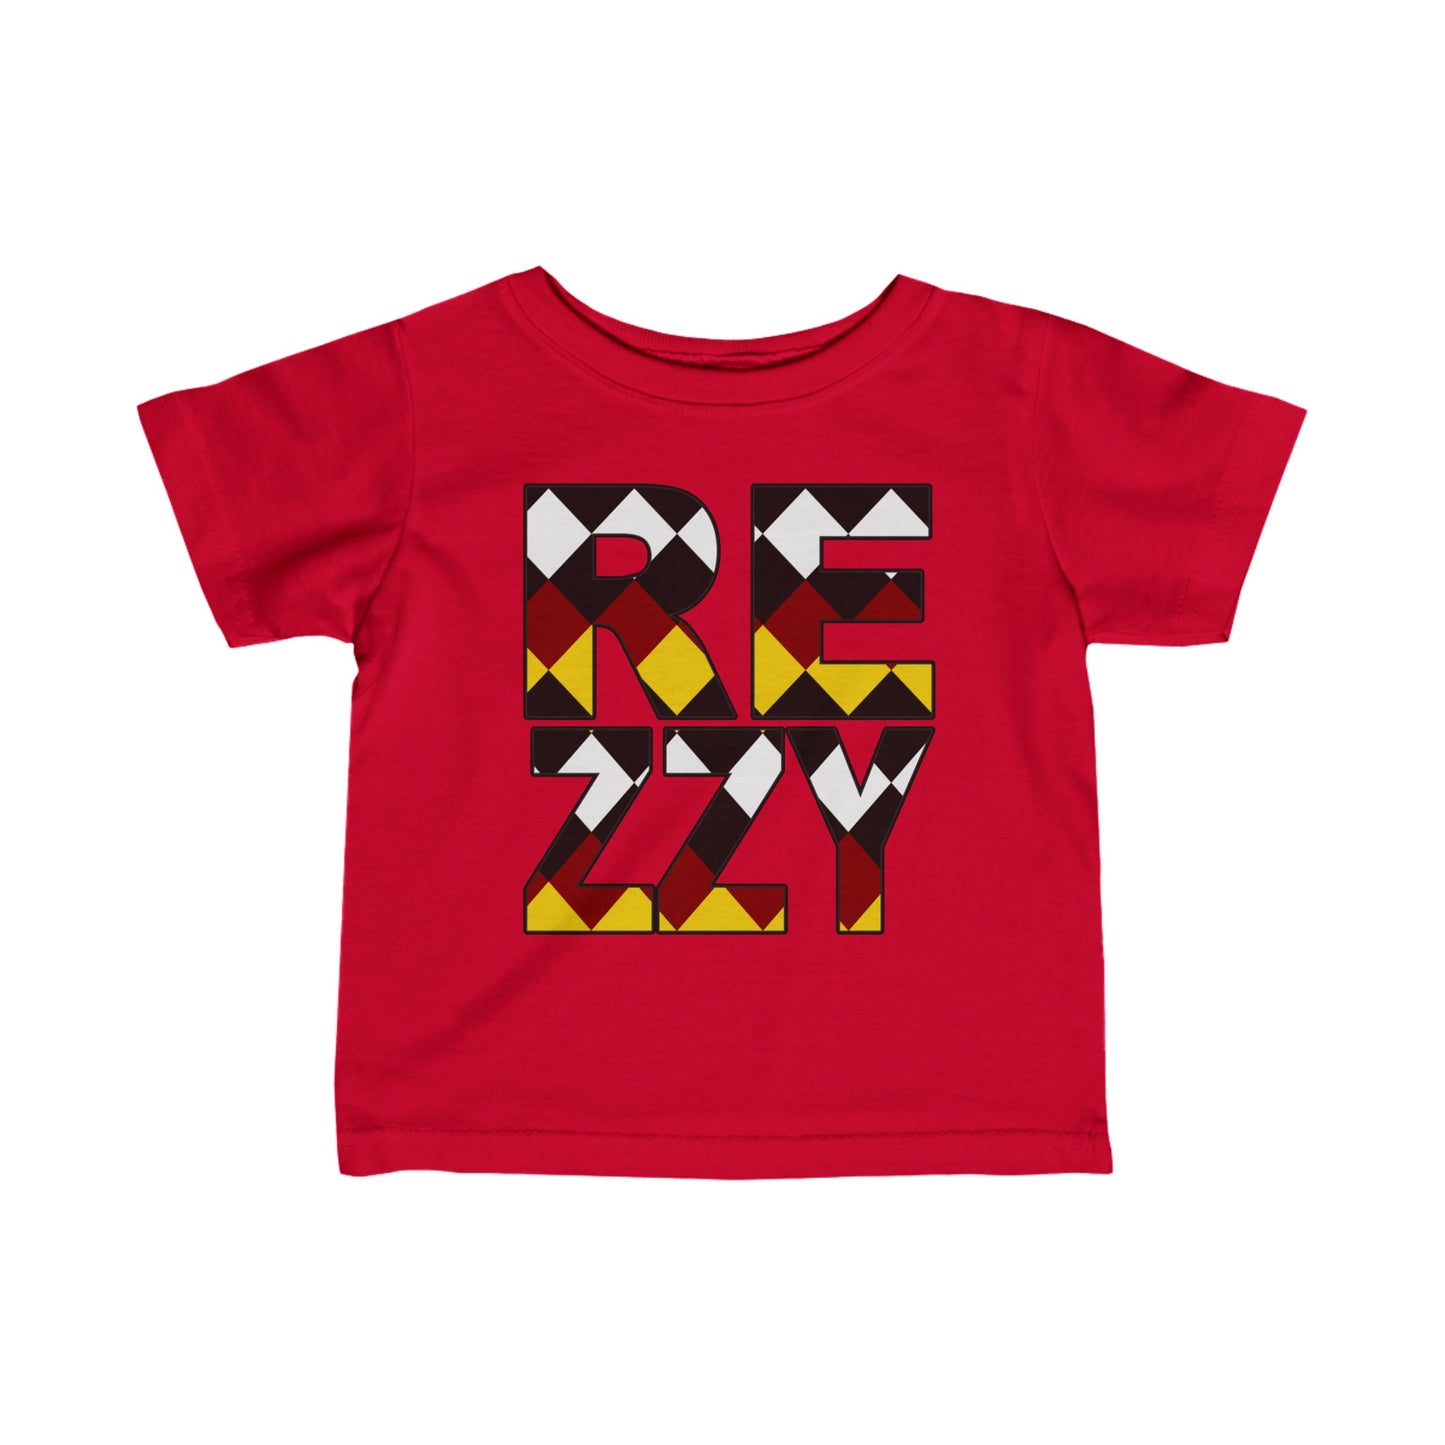 Toddler Rezzy T-shirt